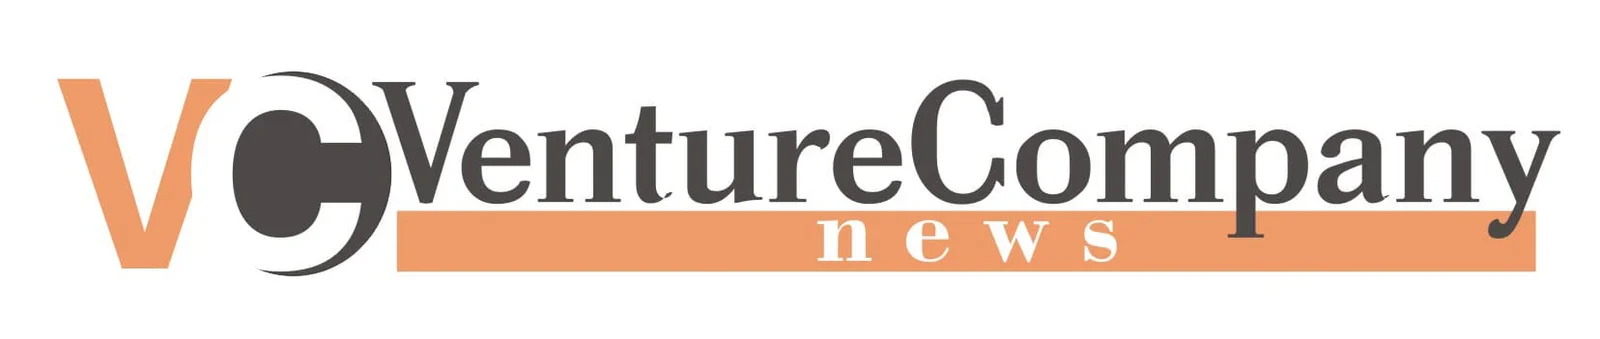 Venture-Company-News-Logo